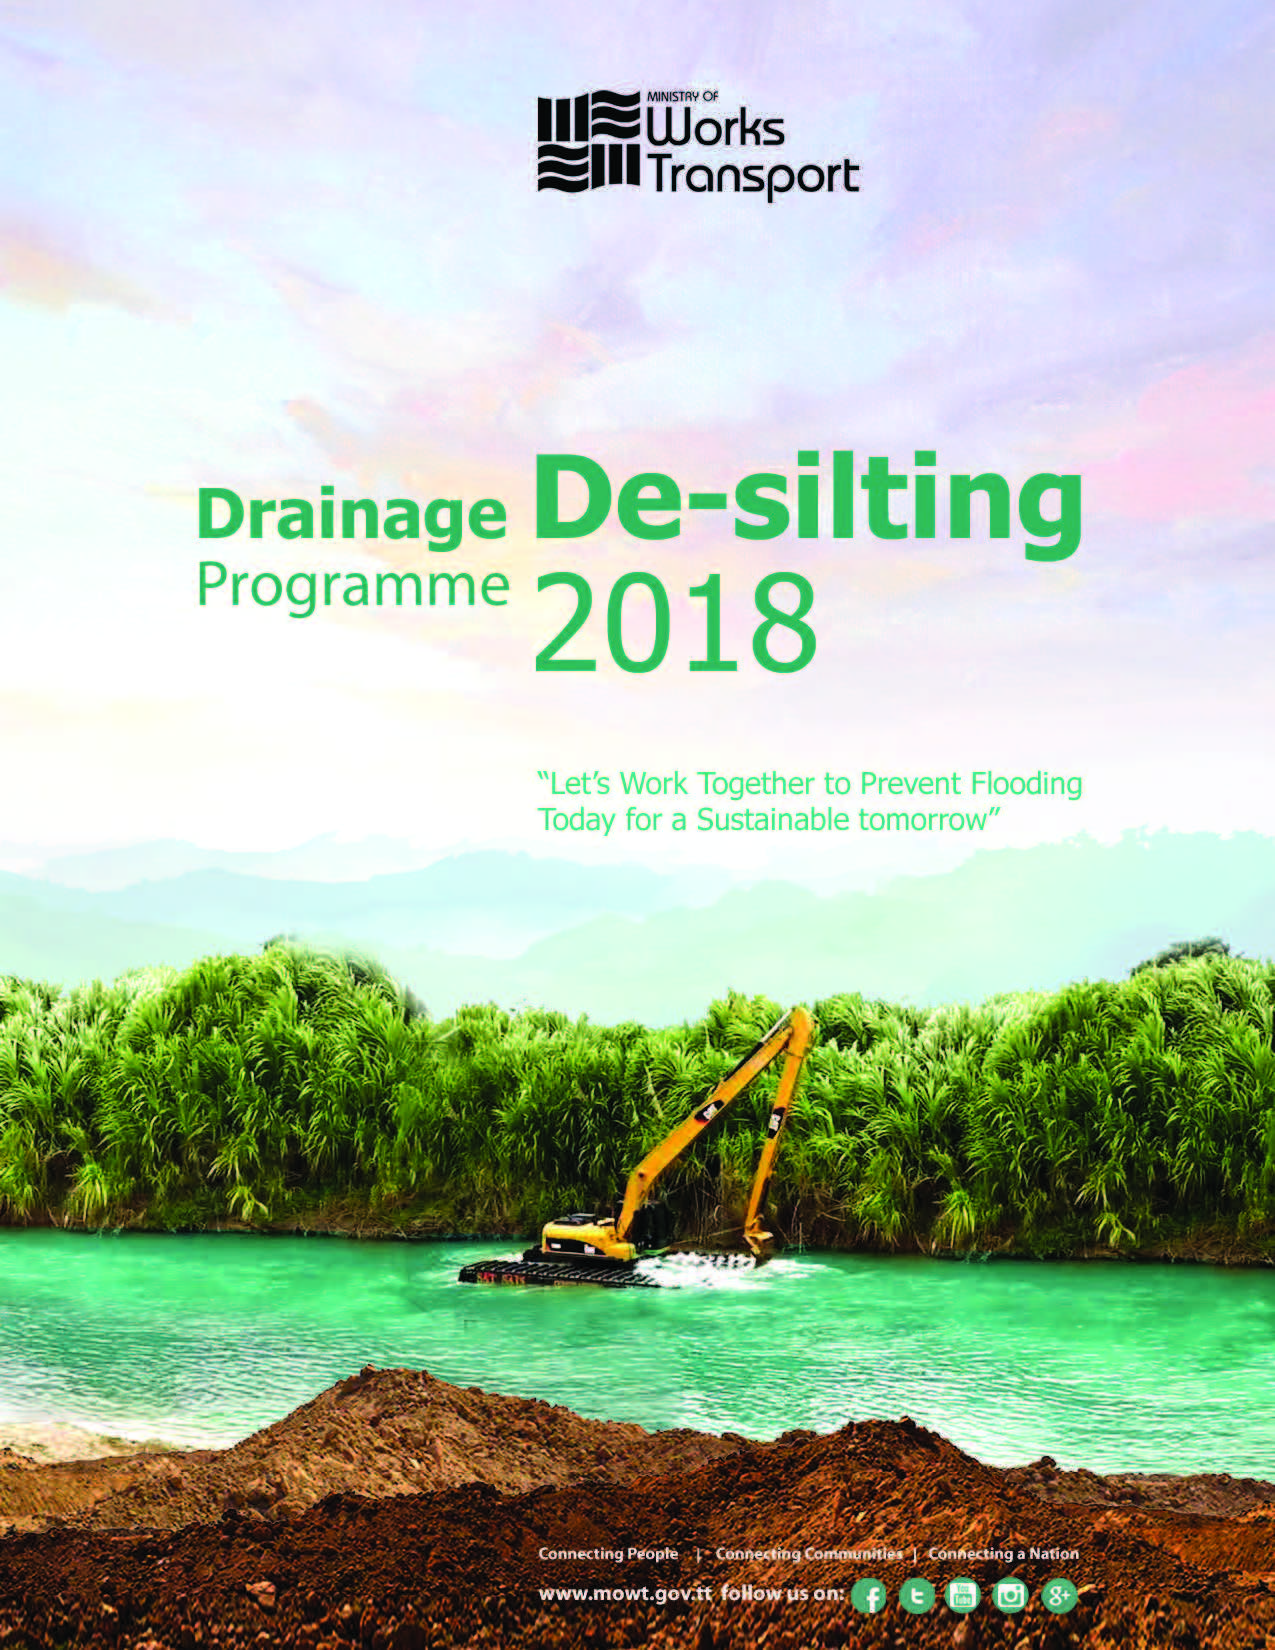 Drainage-Desilting-Programme-2018-1.jpg